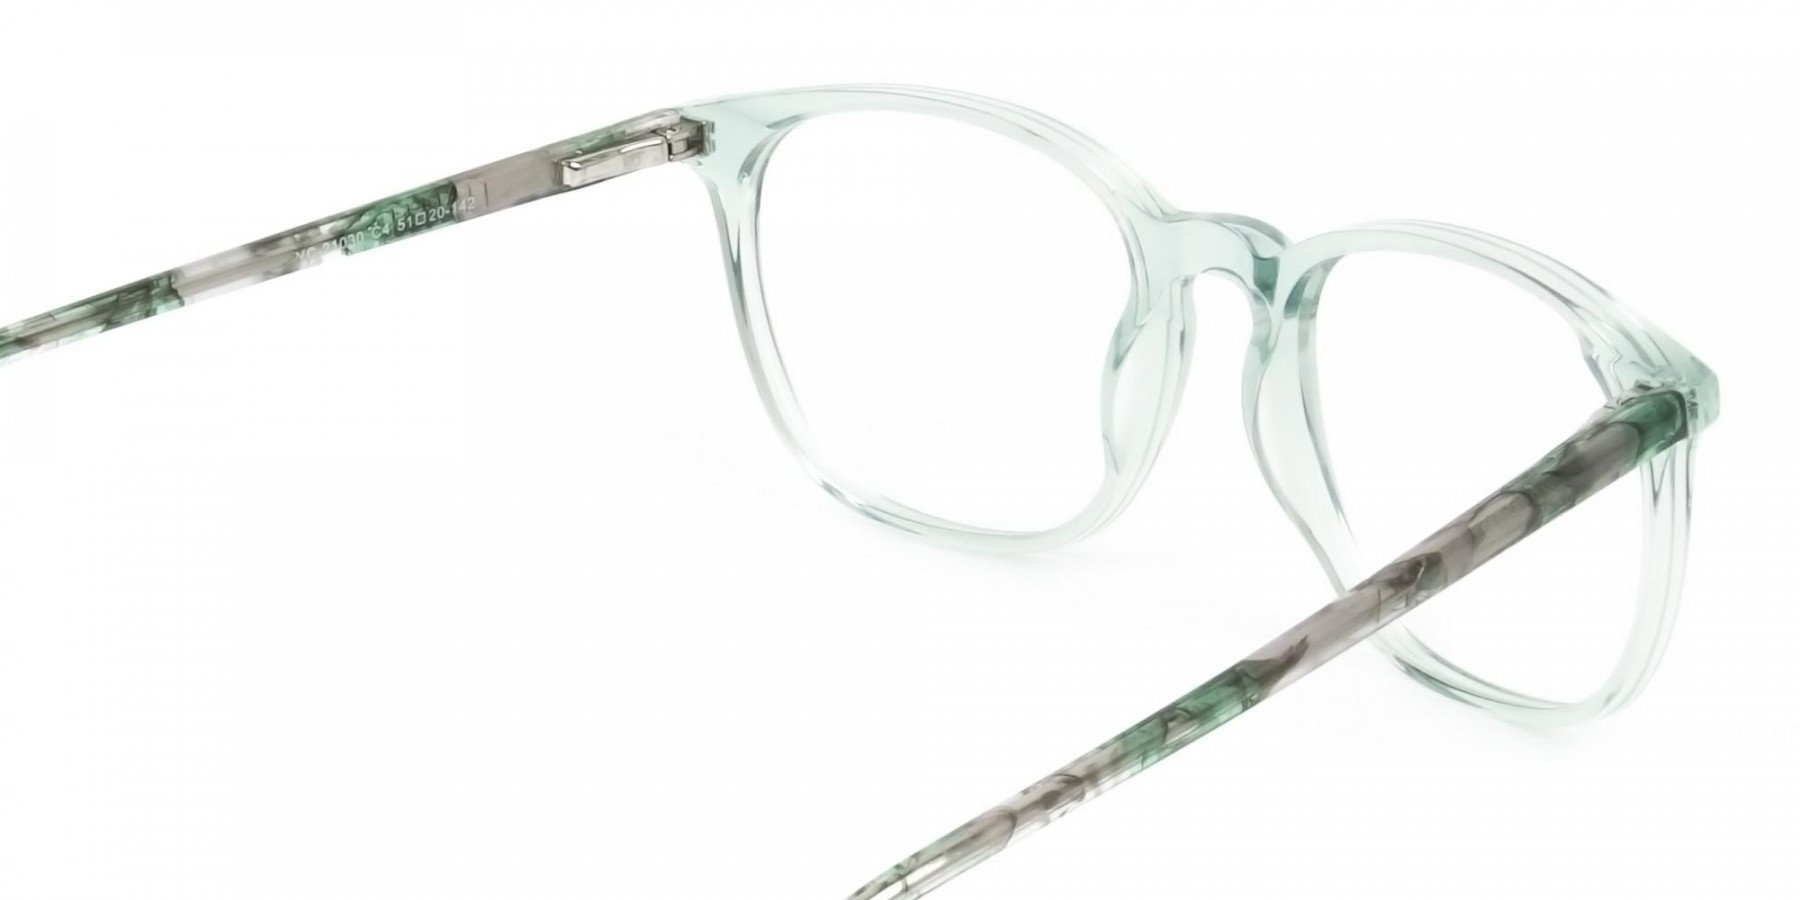 Teal Crysral Green Glasses in Wayfarer - 1